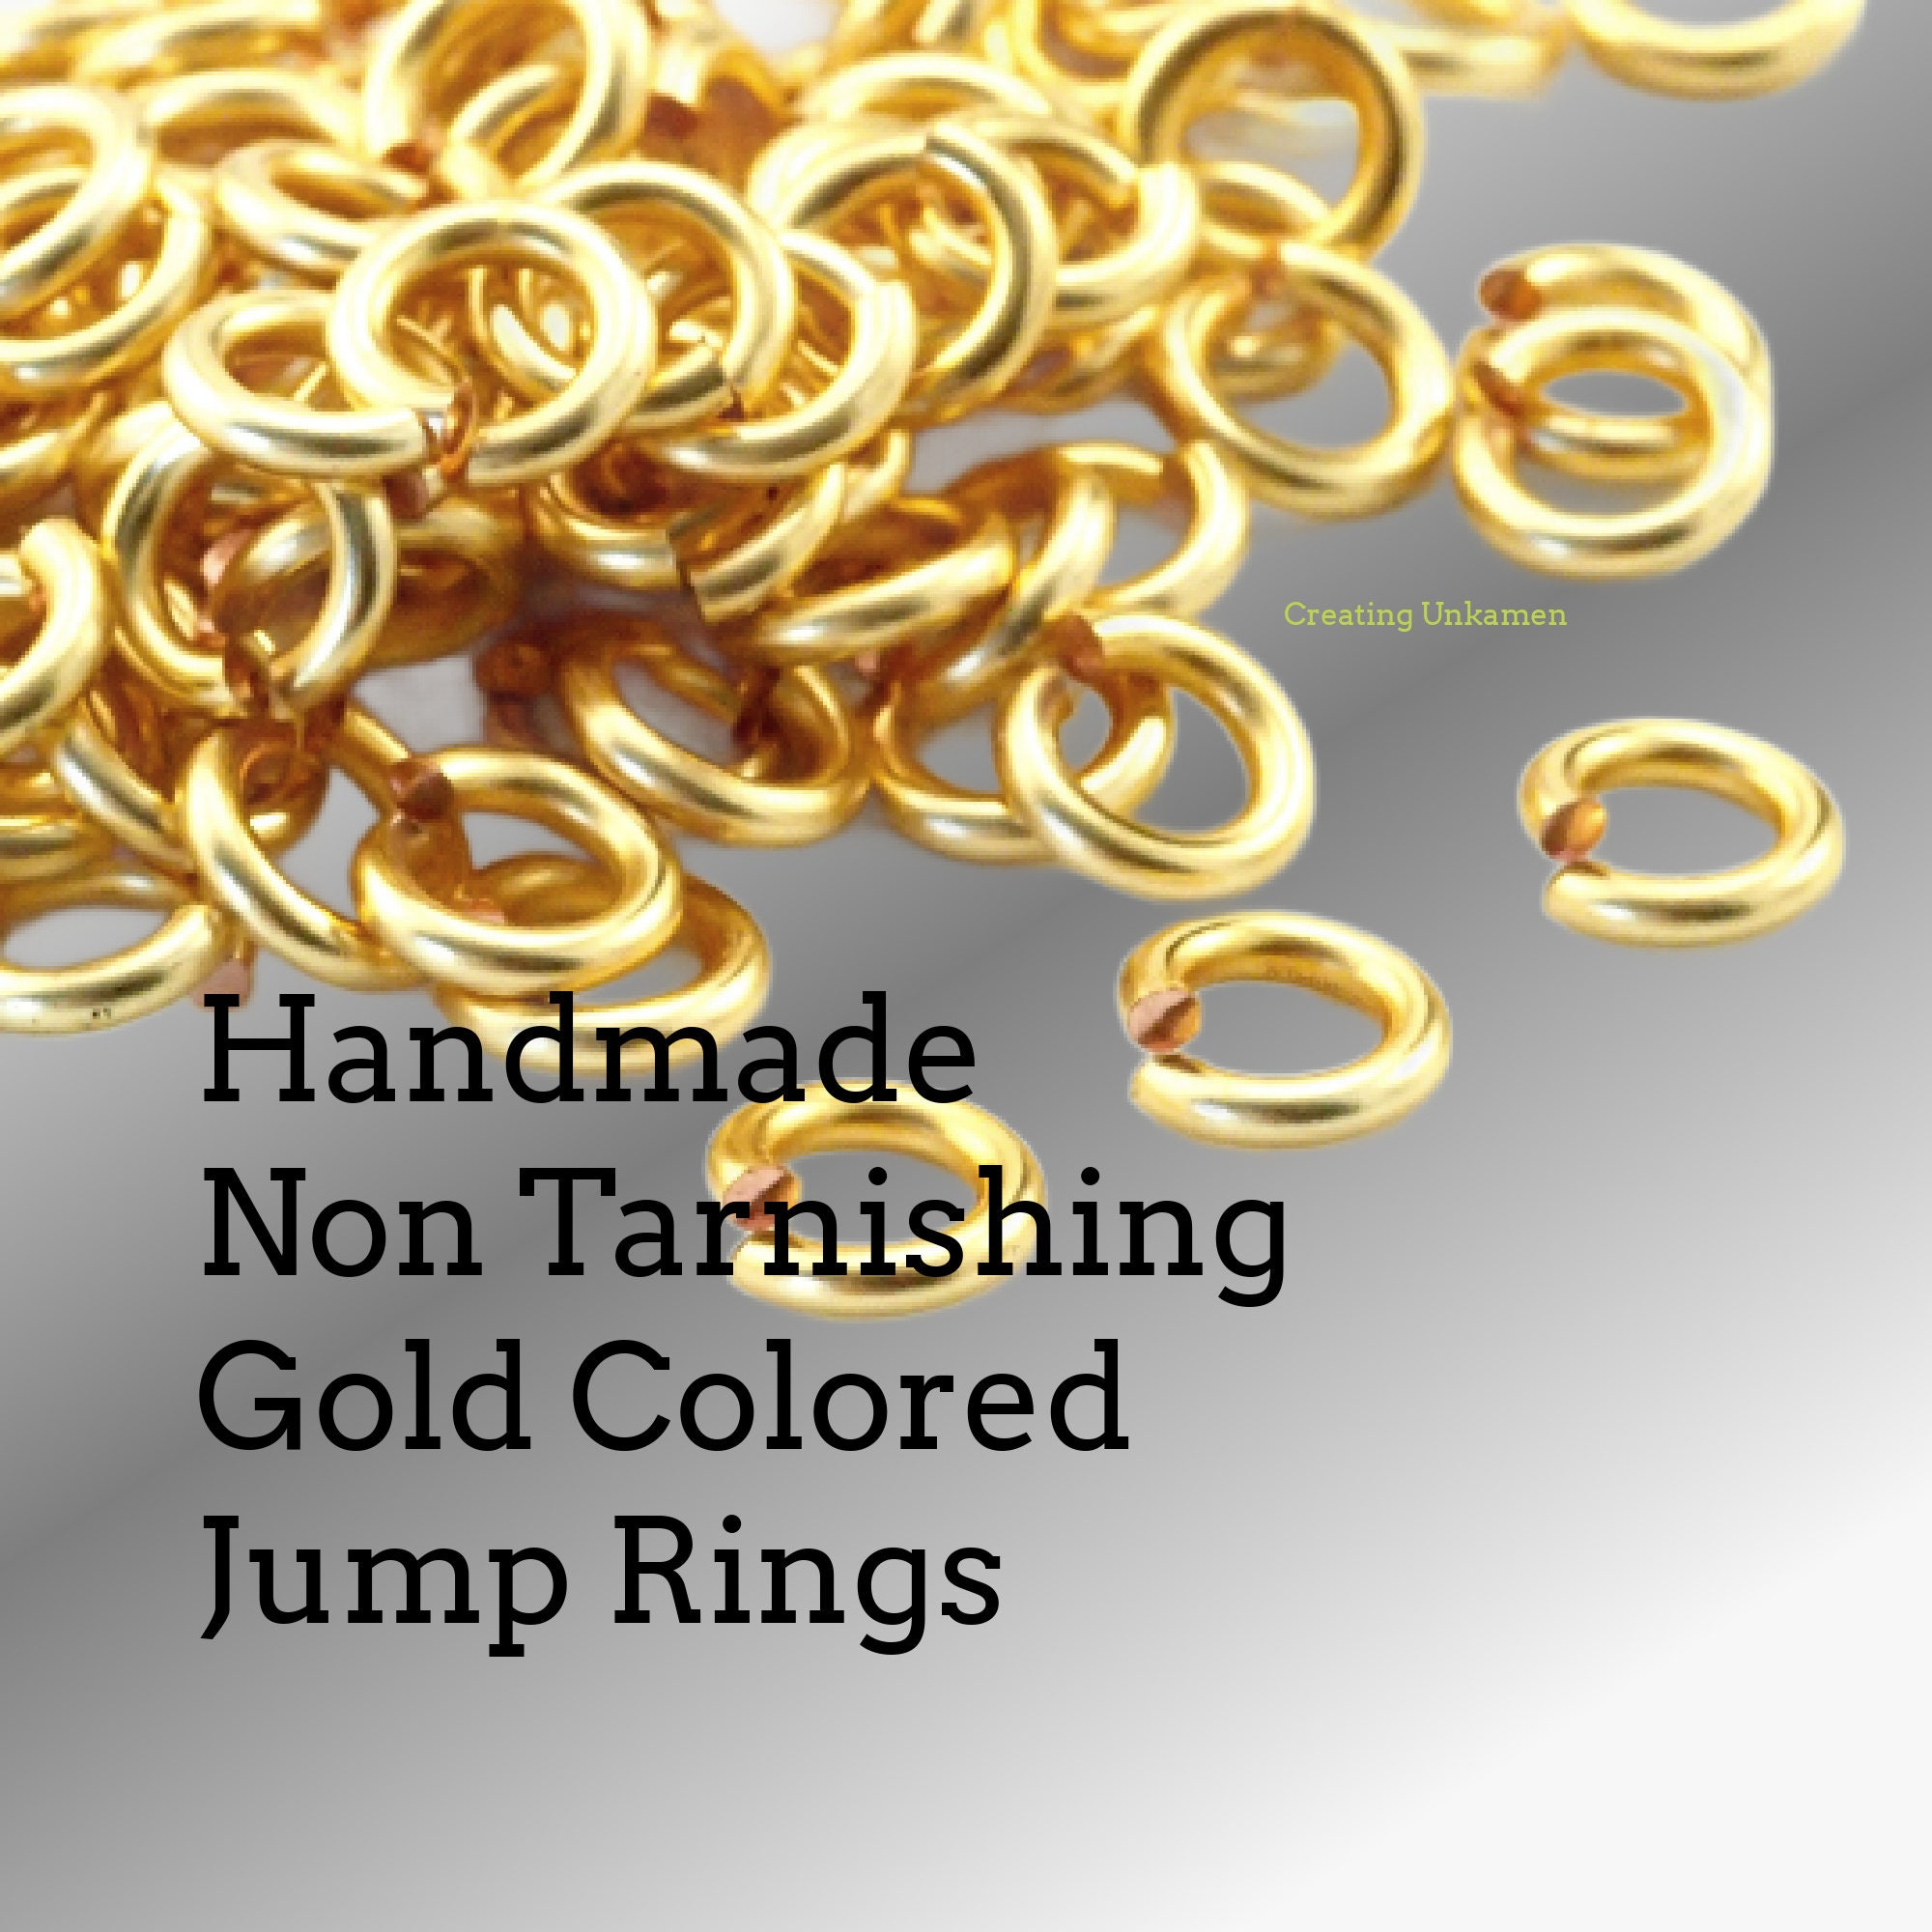 50 14kt Rose Gold Filled Jump Rings - 12, 14, 16, 18, 20, 24, 26